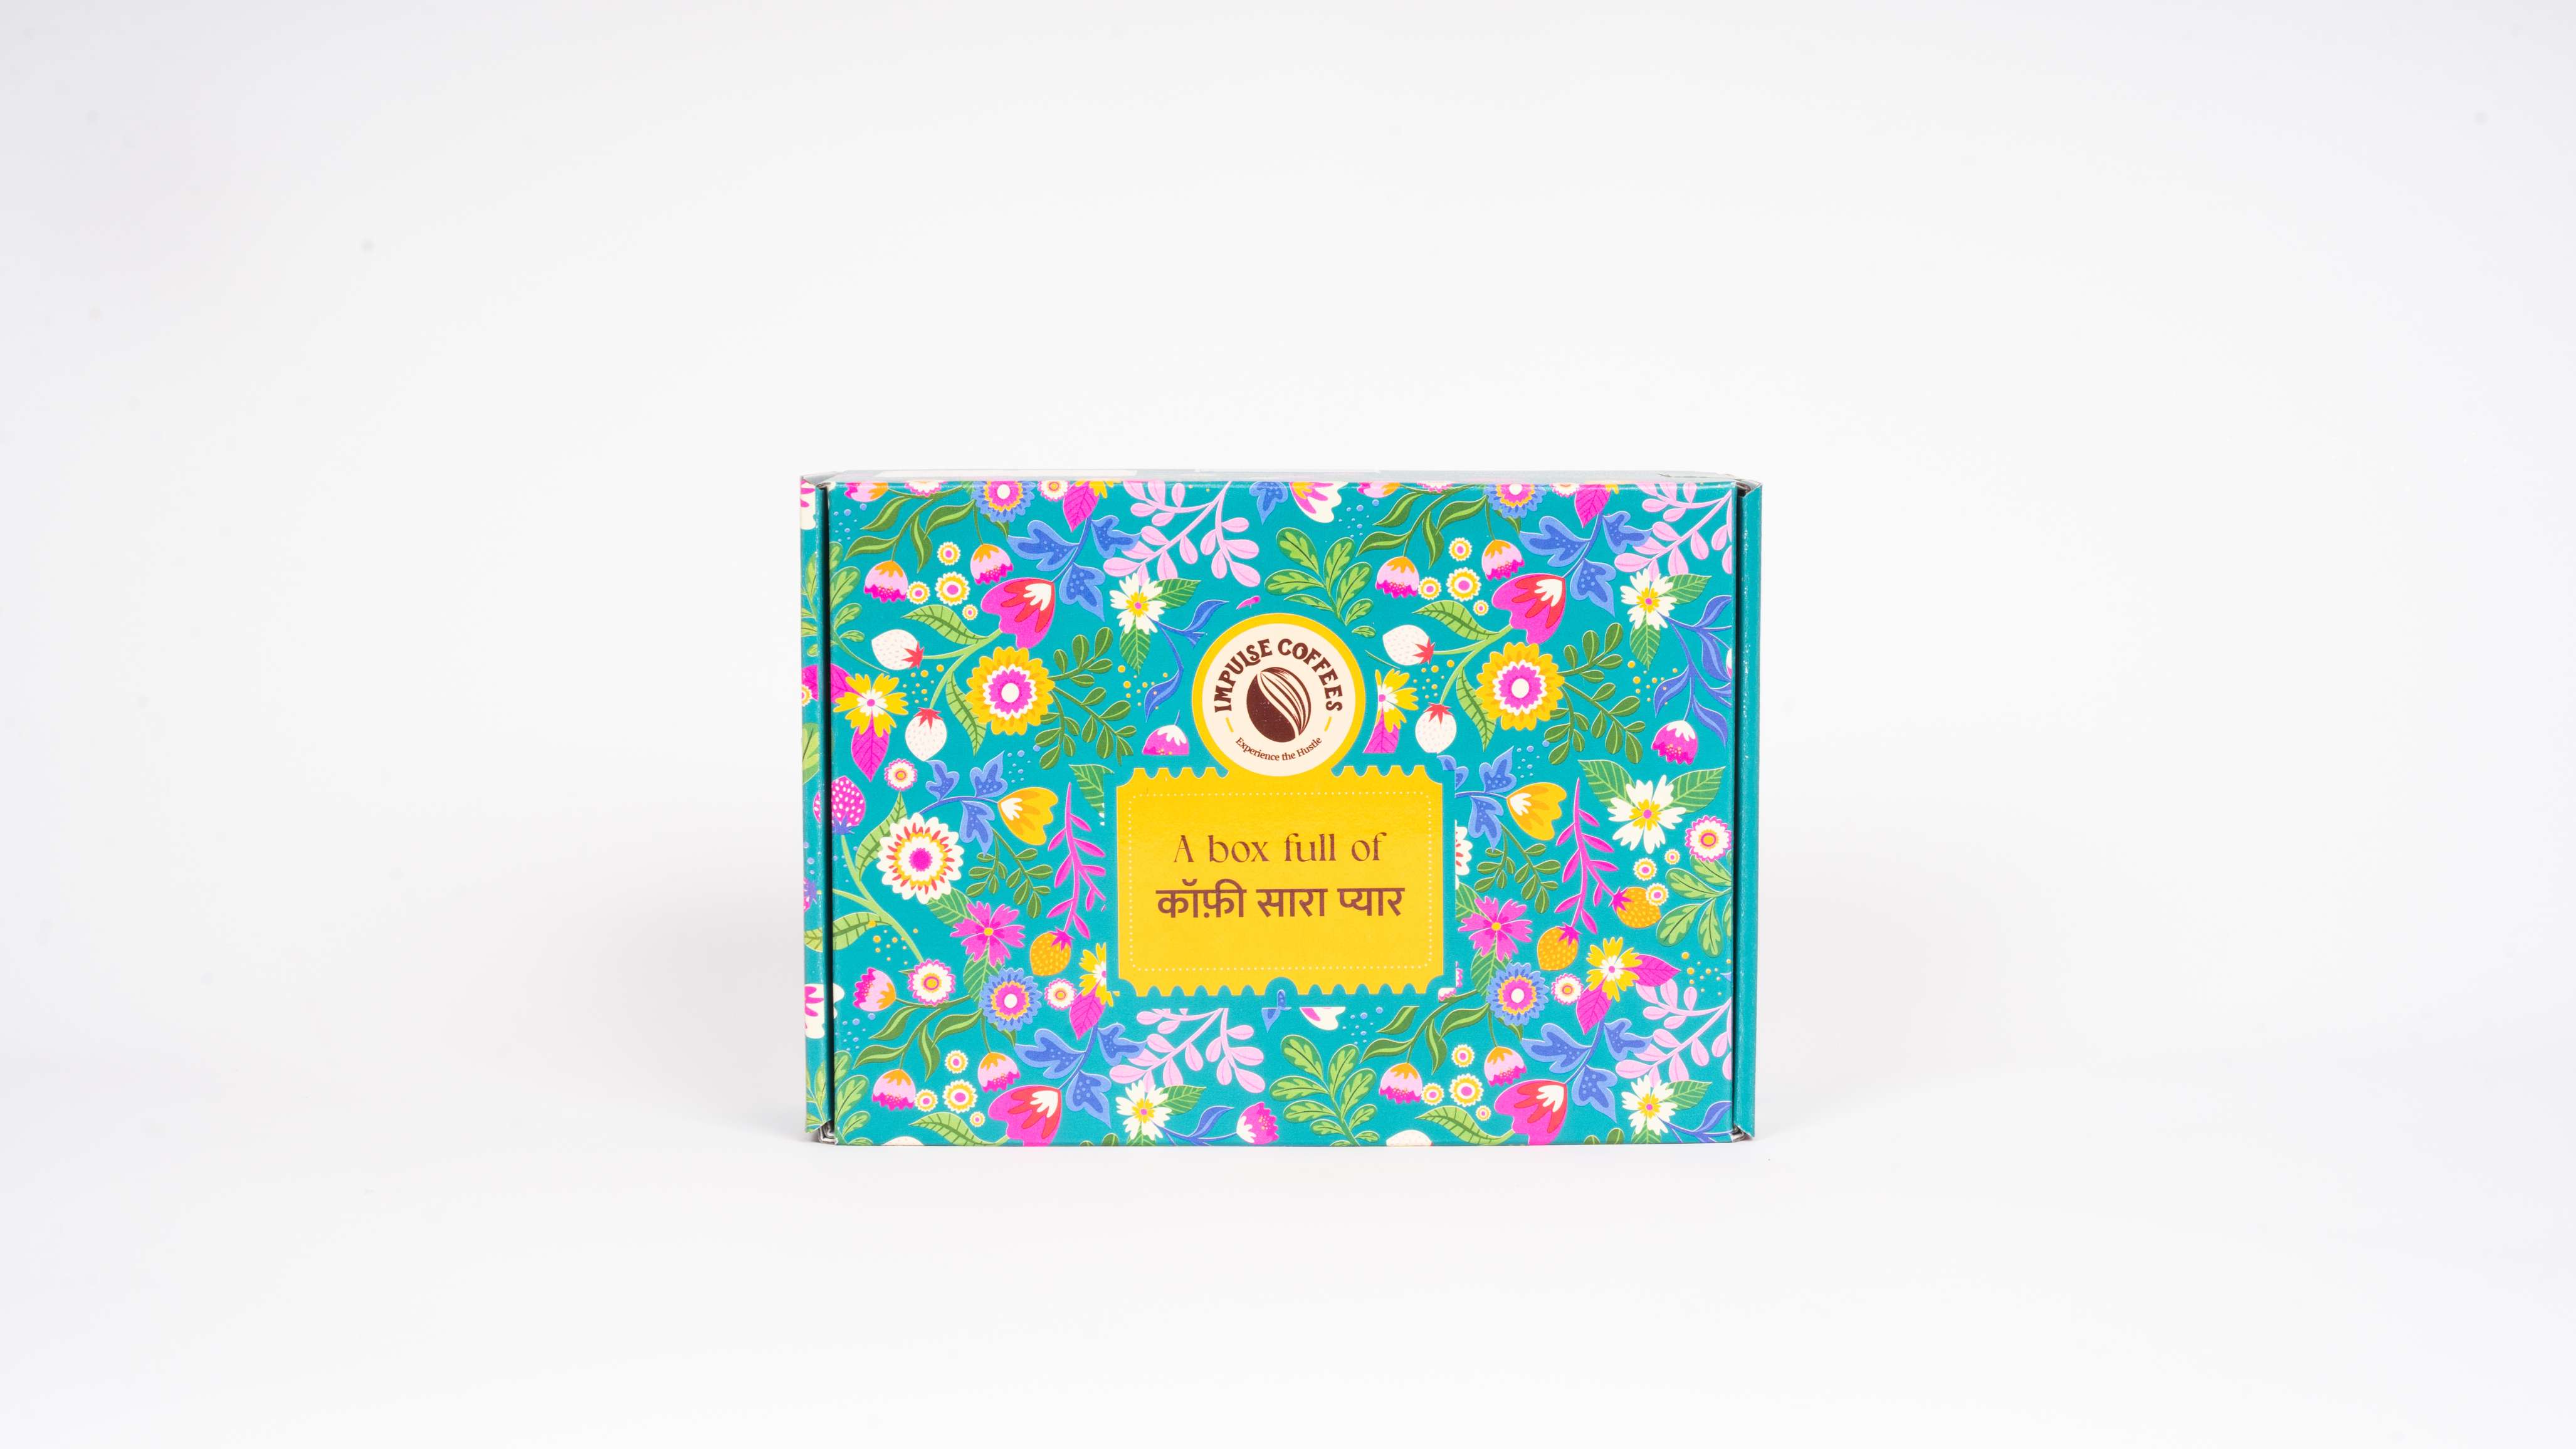 Impulse Coffees Gift Box | Vichaar over Vanilla 100gms + Hum Tum aur Hot Chocolate 220gms